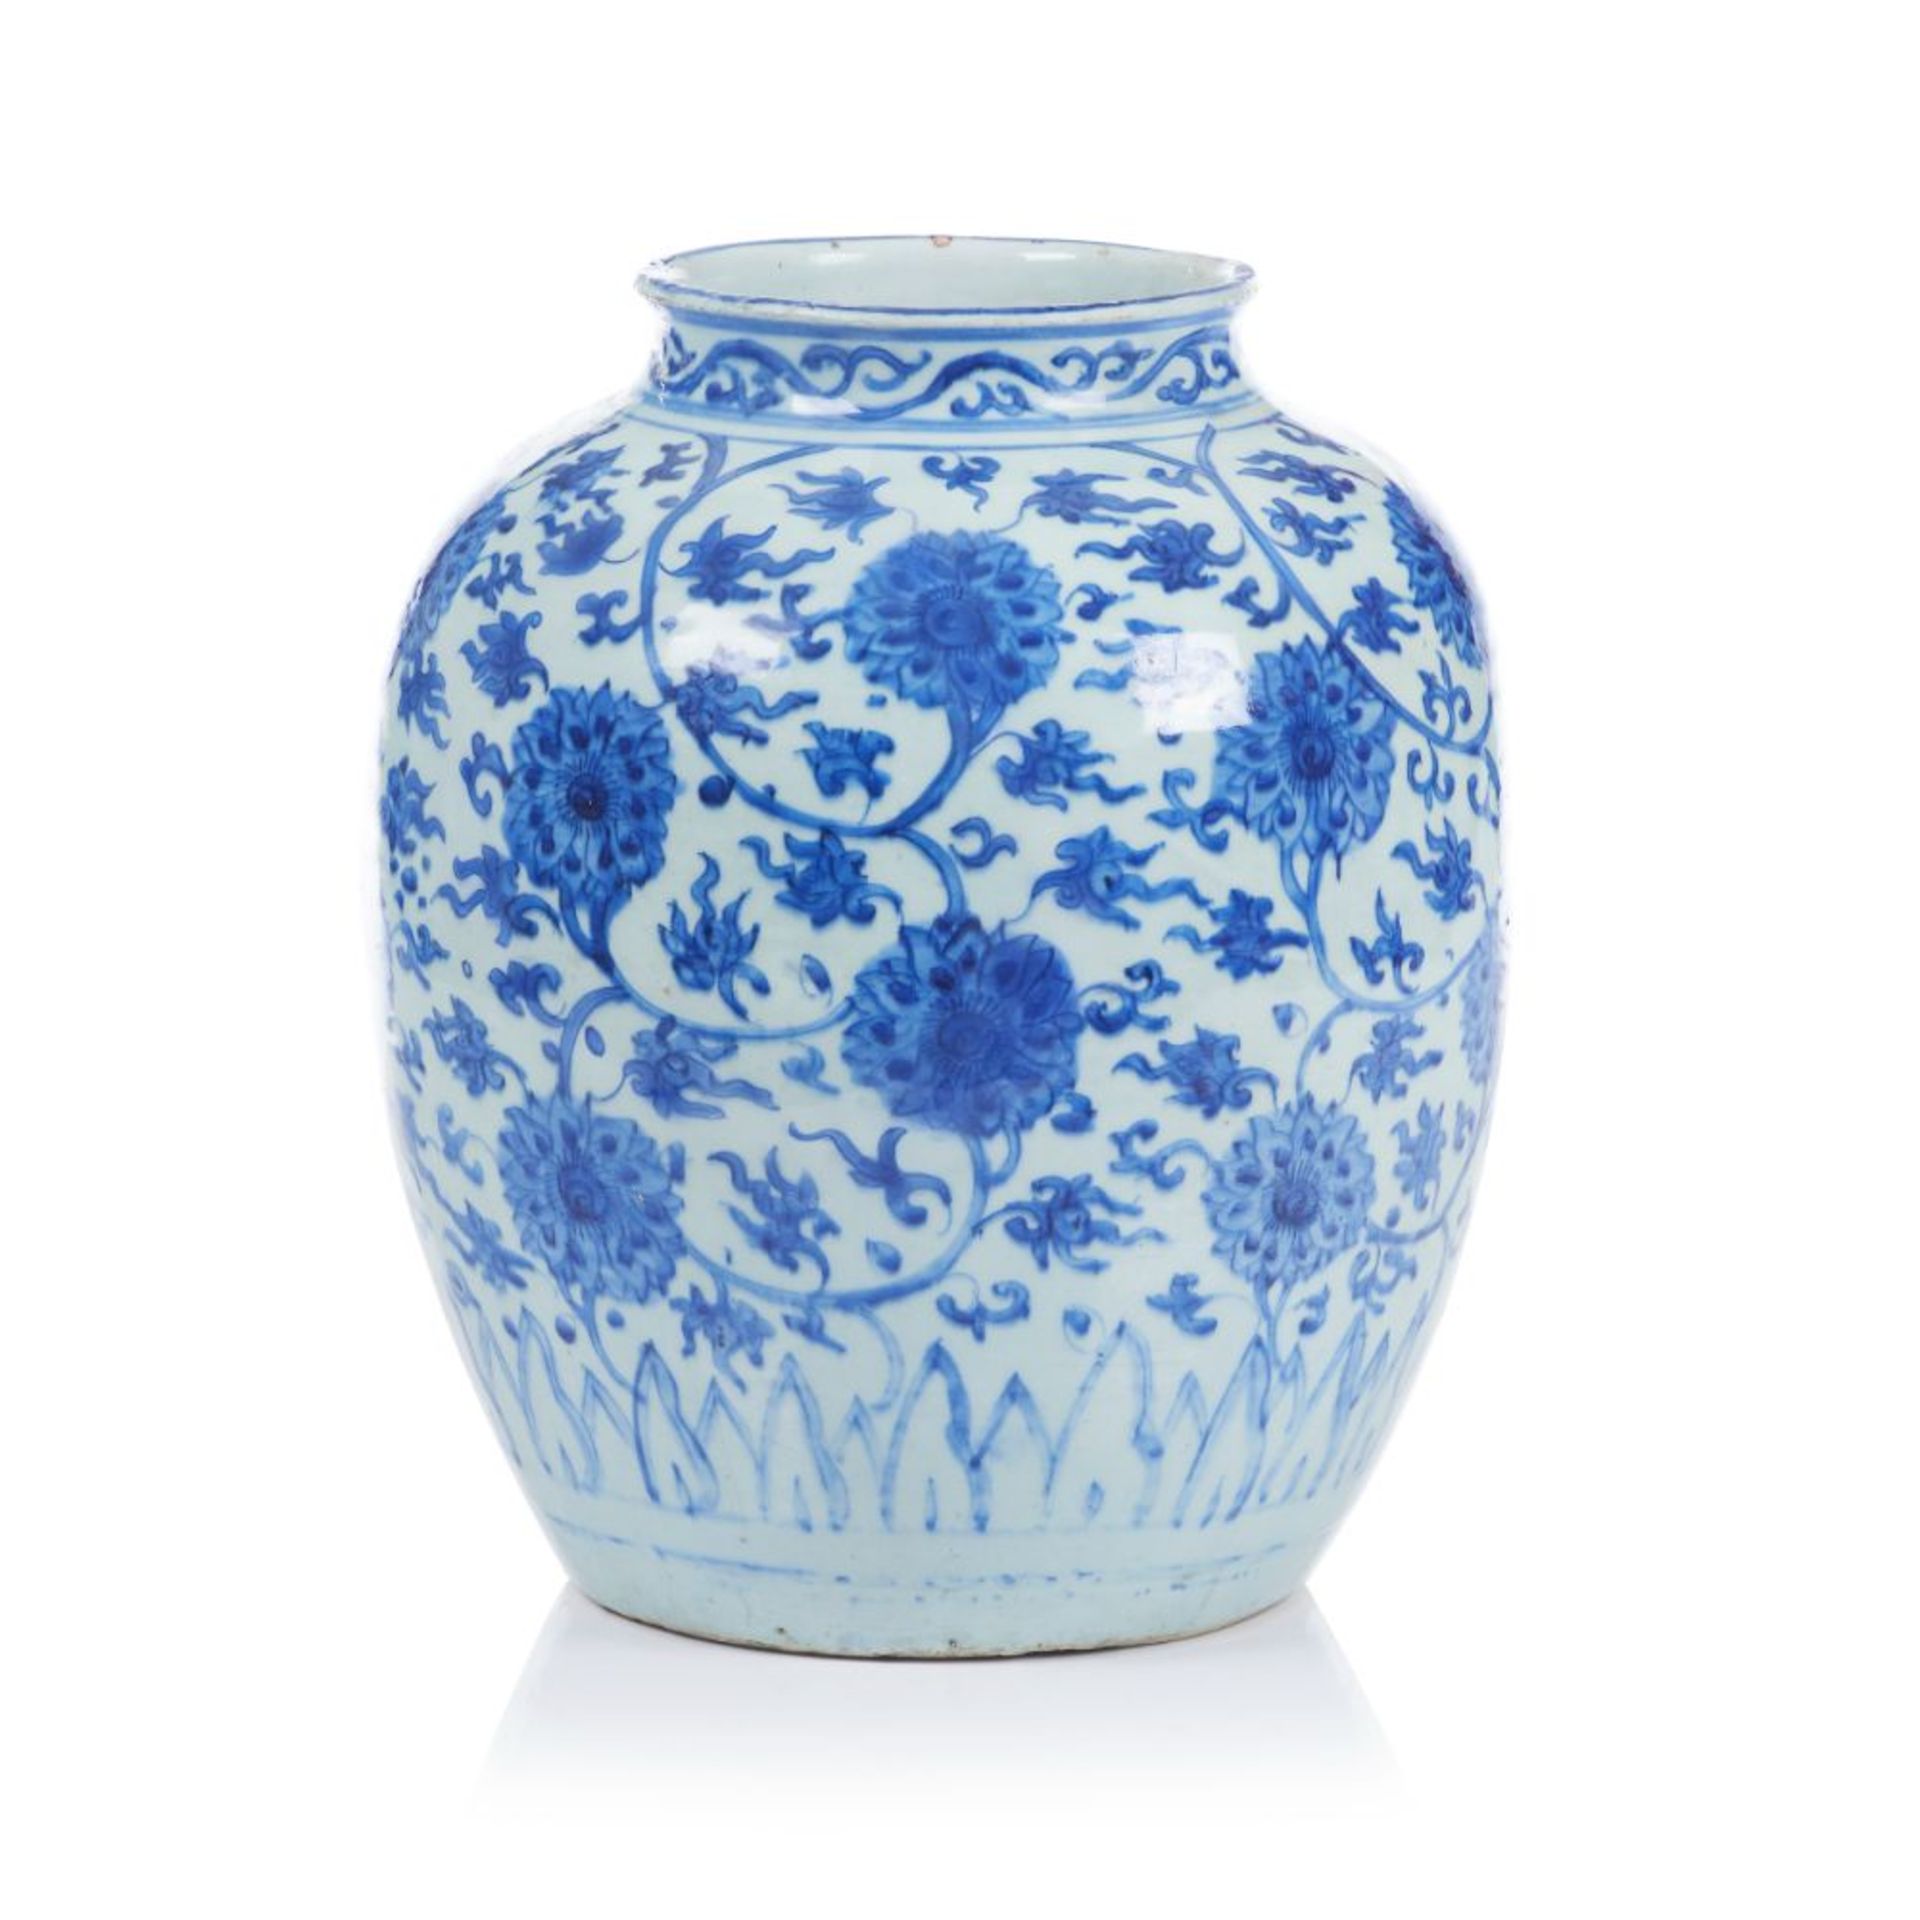 A vase, Chinese porcelain, Blue underglaze decoration of foliage motifs scrolls, Ming Dynasty,